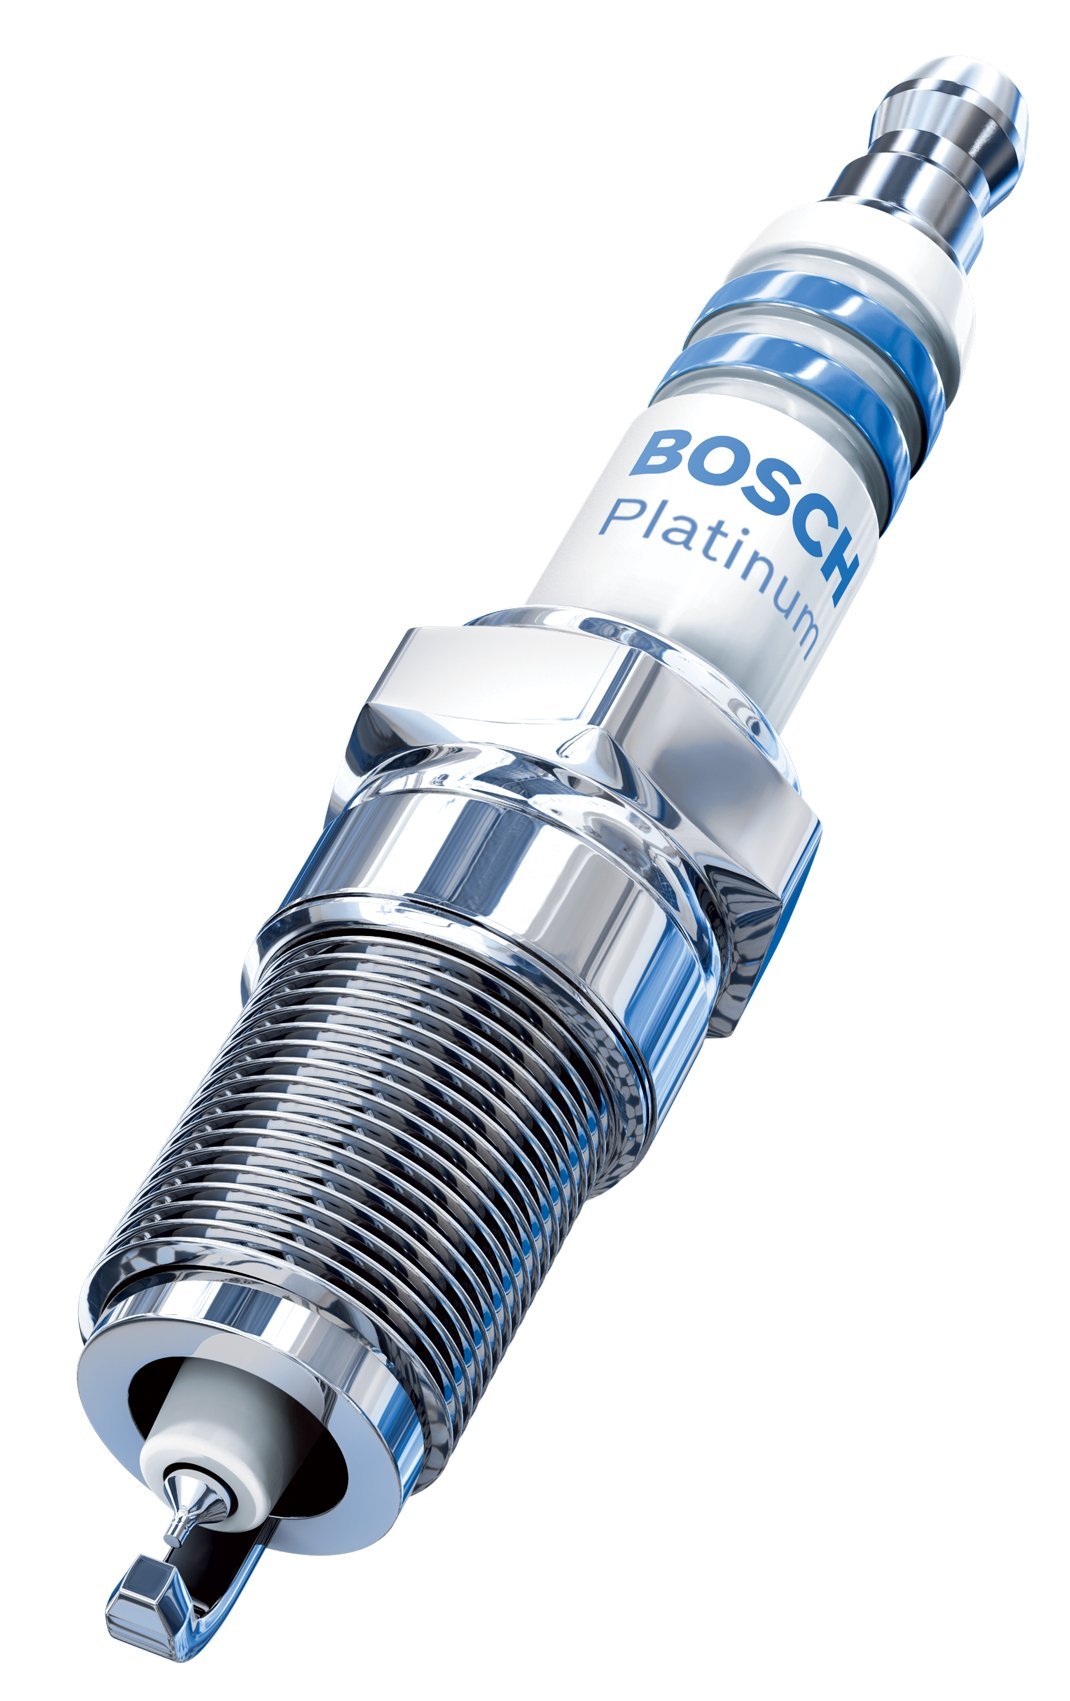 Bosch 6702 Platinum Zündkerze (4 Stück) von Bosch